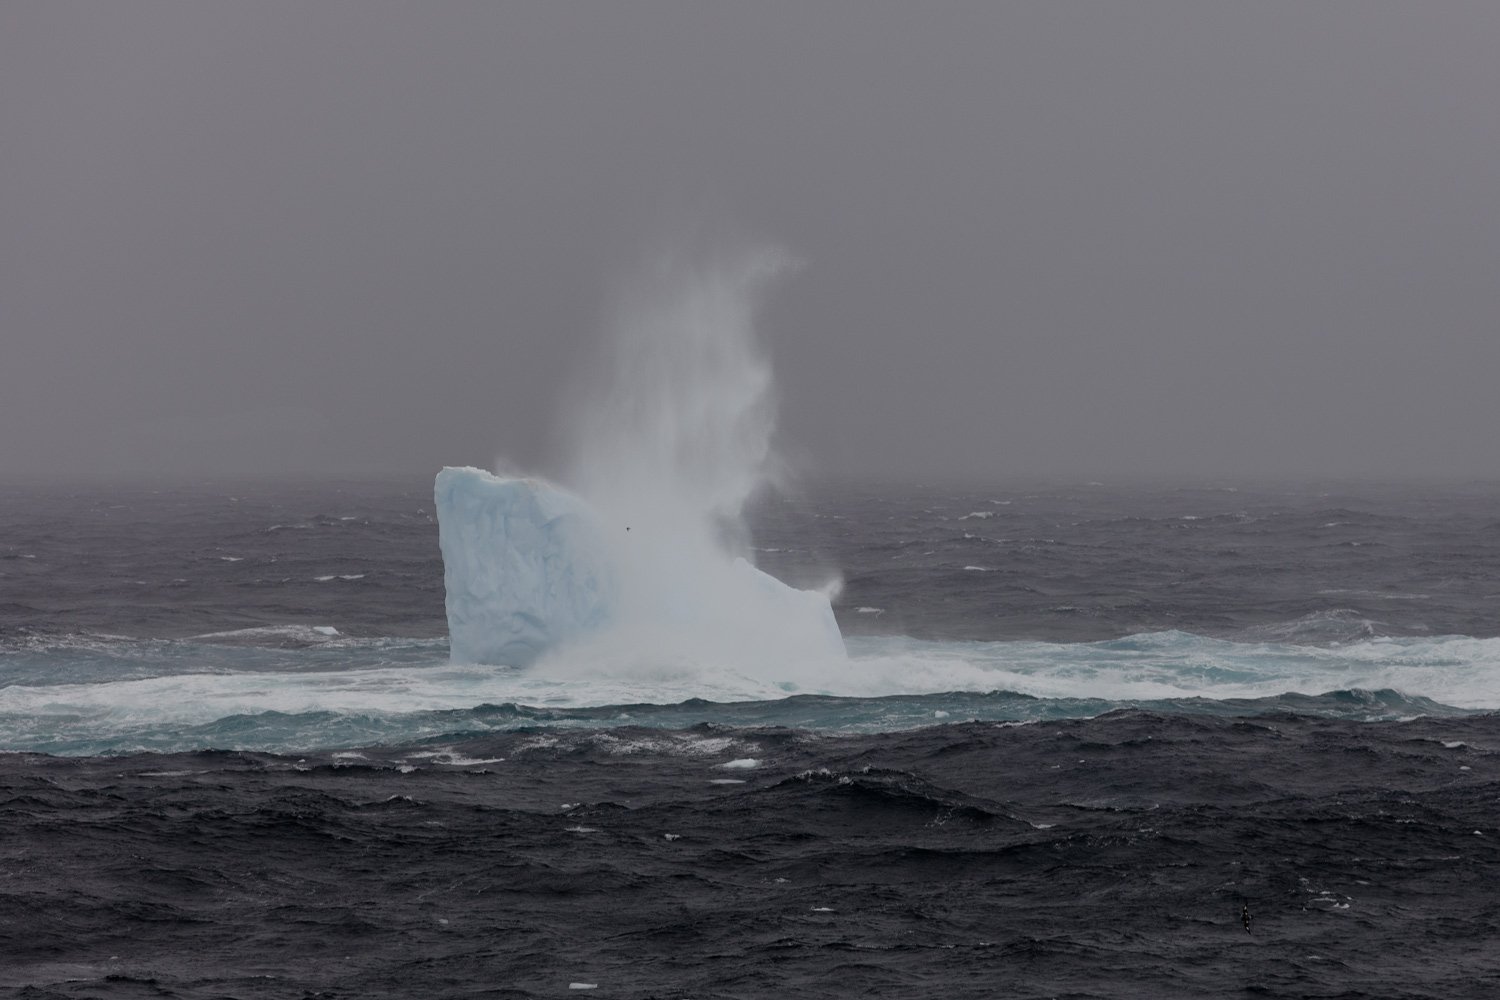 Iceberg hit by waves